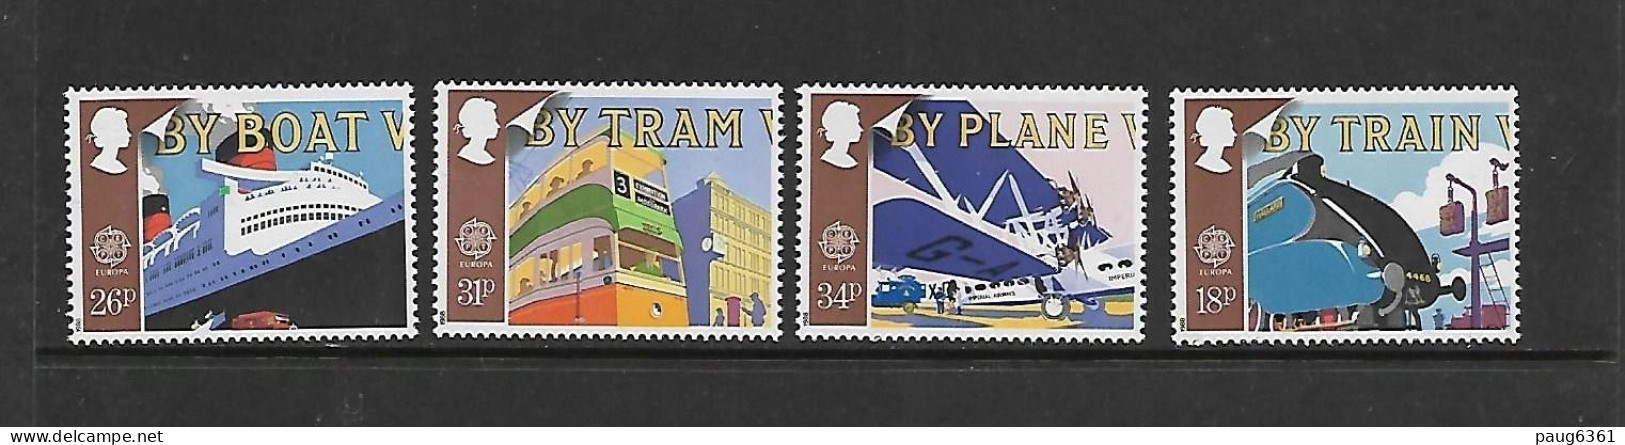 GRANDE-BRETAGNE 1988 TRAINS  YVERT N°1311/1314 NEUF MNH** - Trenes